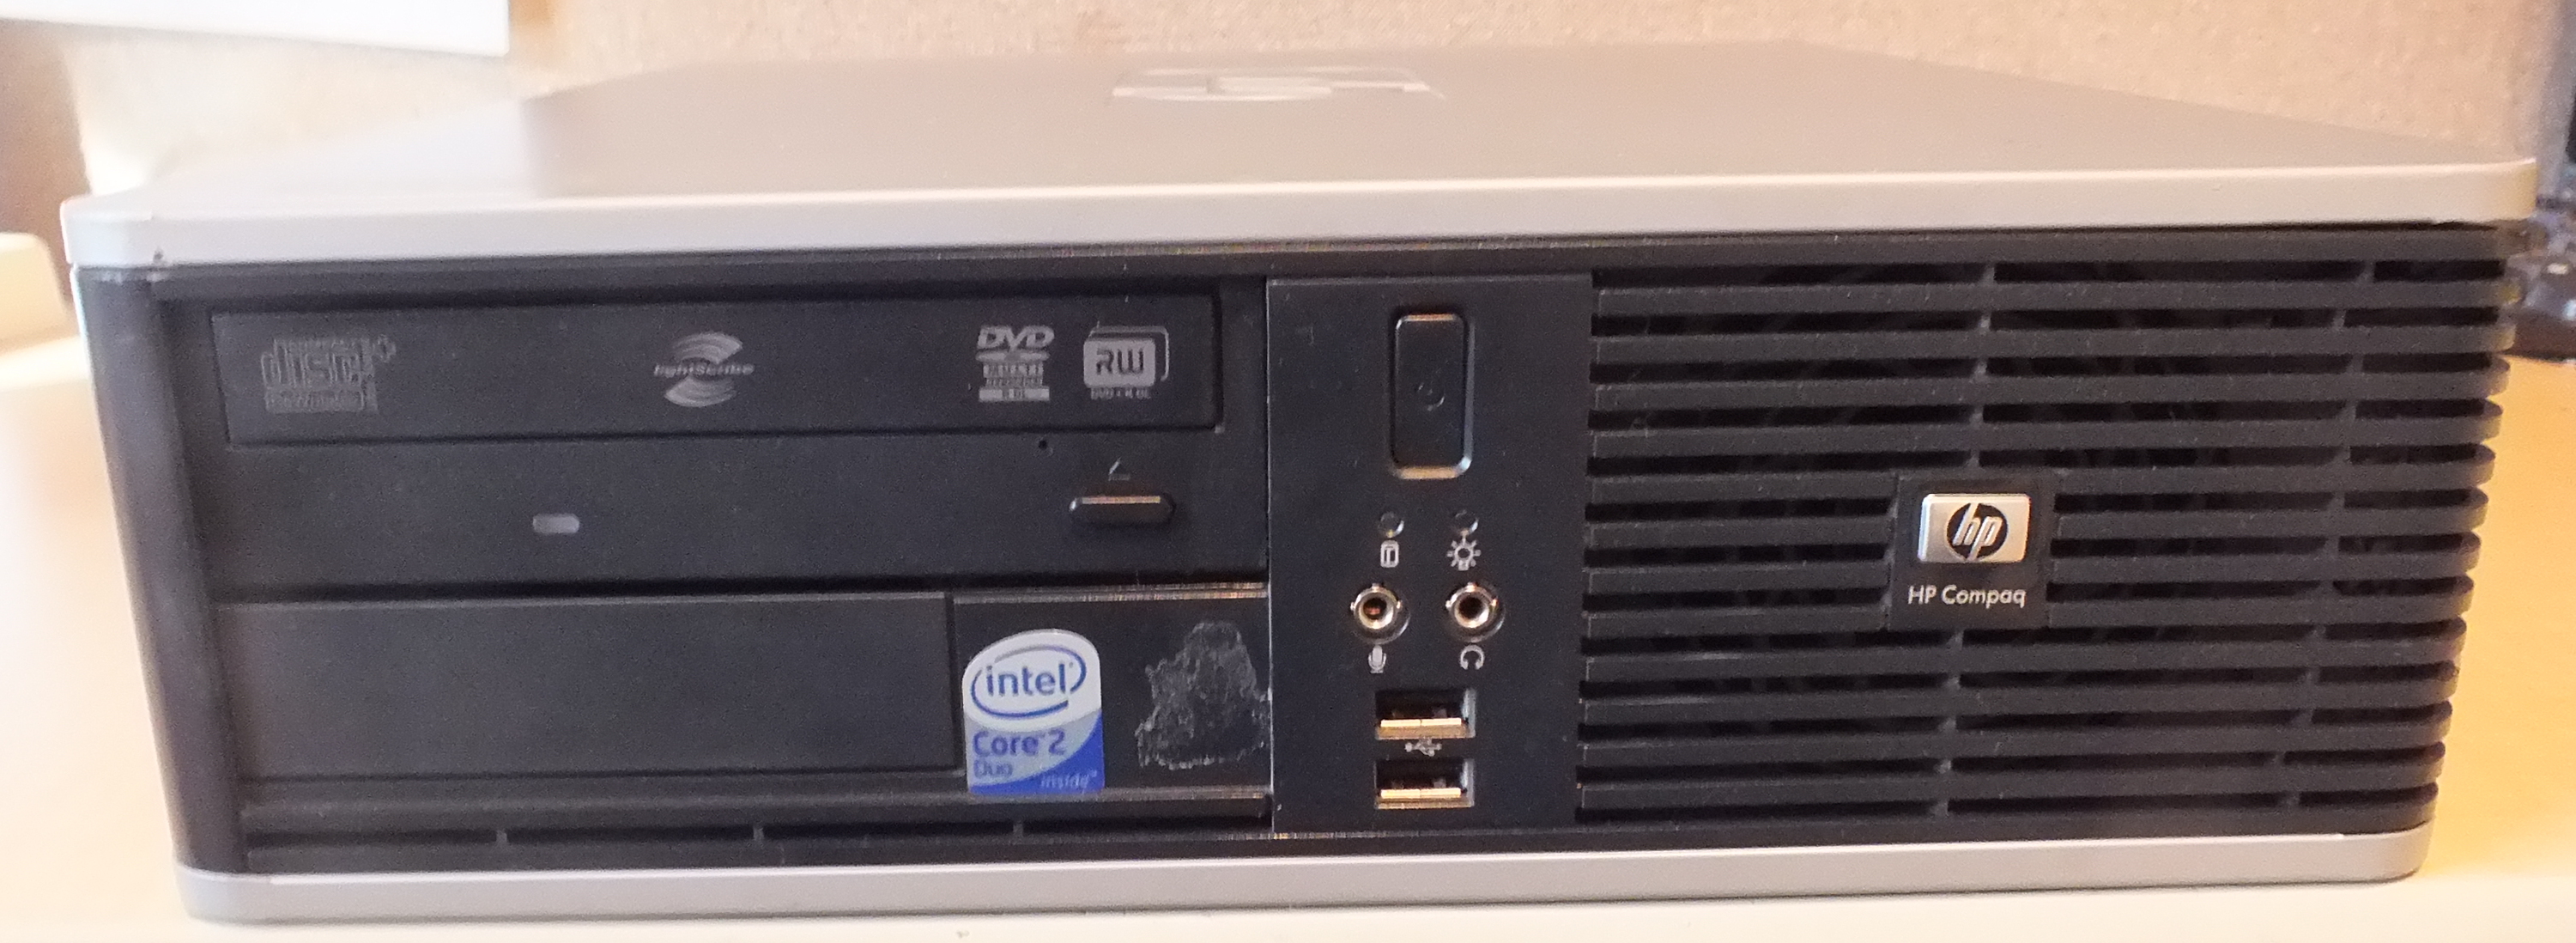 Refurbished Hp Compaq Dc5800 Available Ge Computing Internet Service